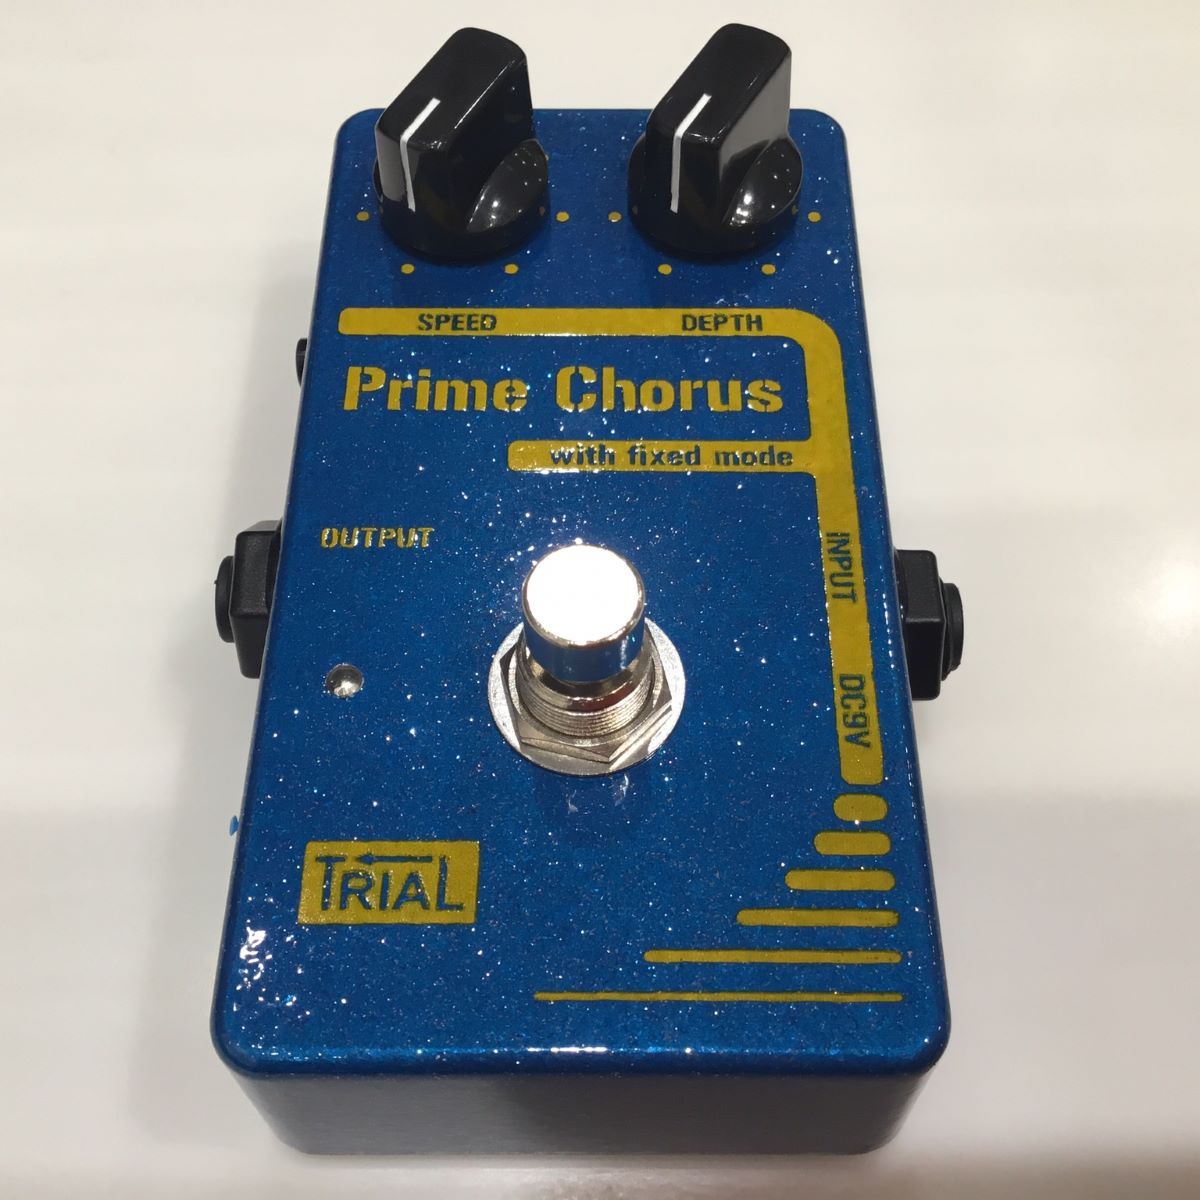 TRIAL prime chorusギター - エフェクター